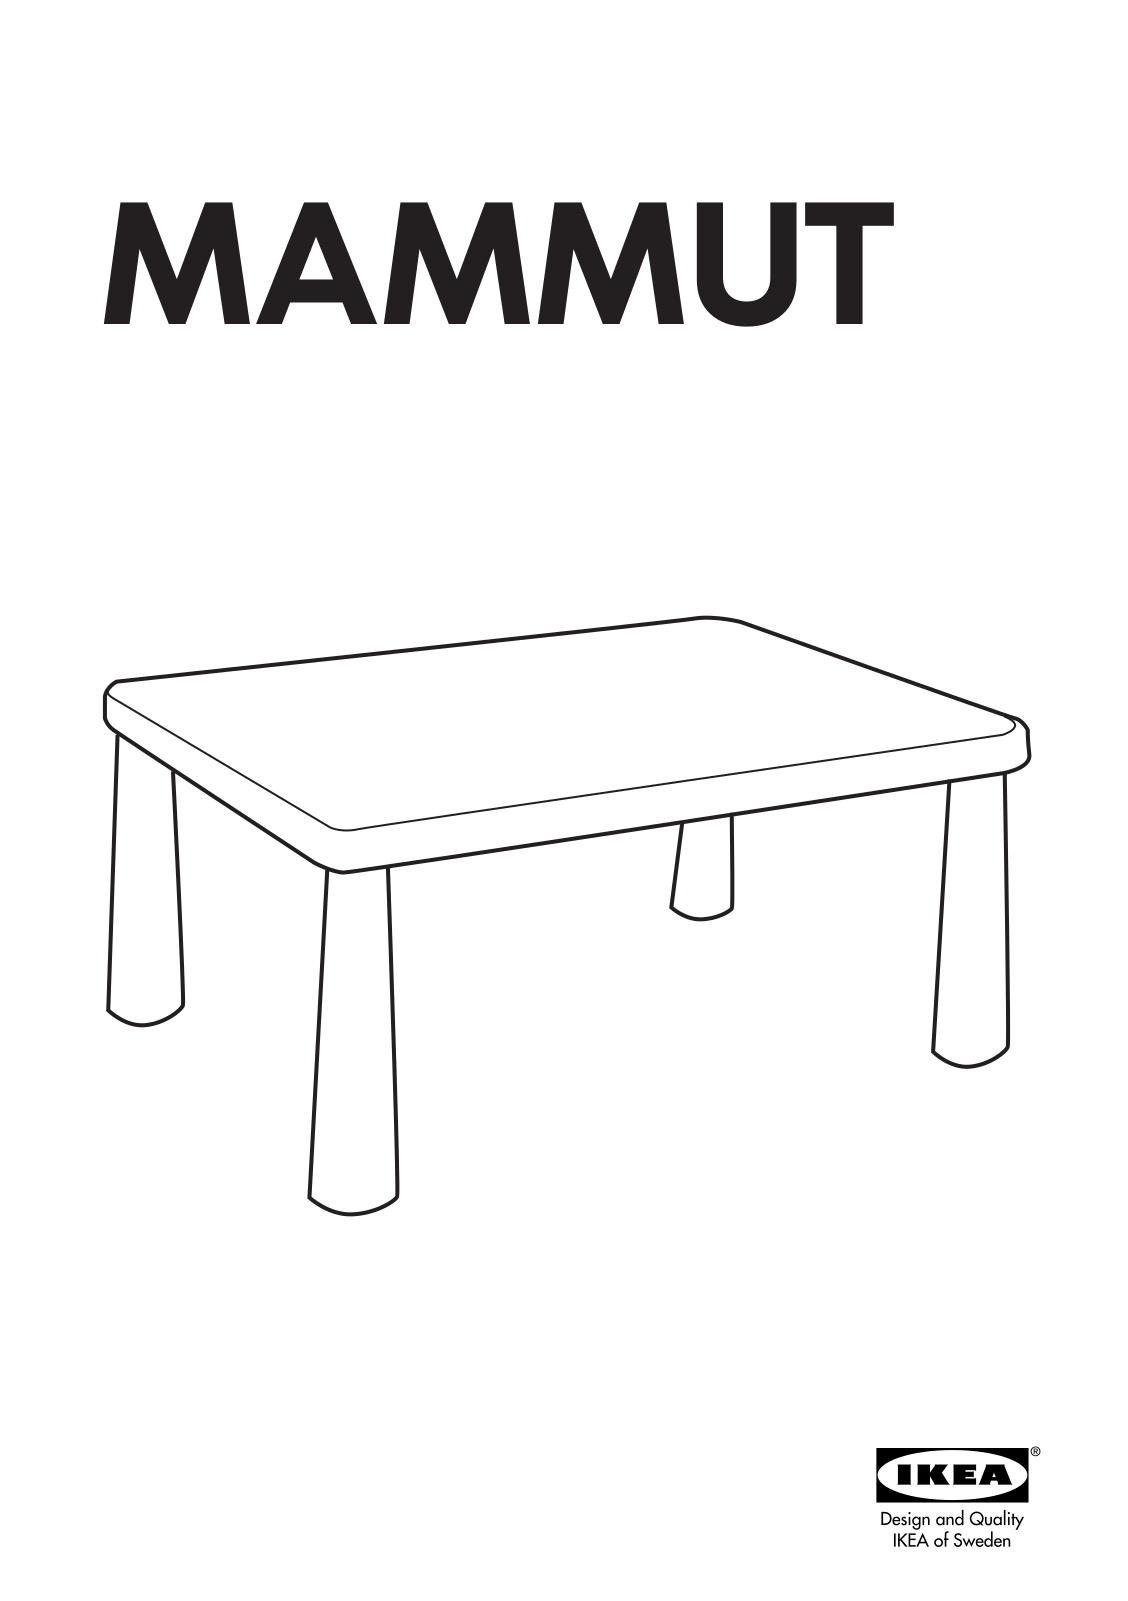 IKEA MAMMUT CHILD TABLE Assembly Instruction